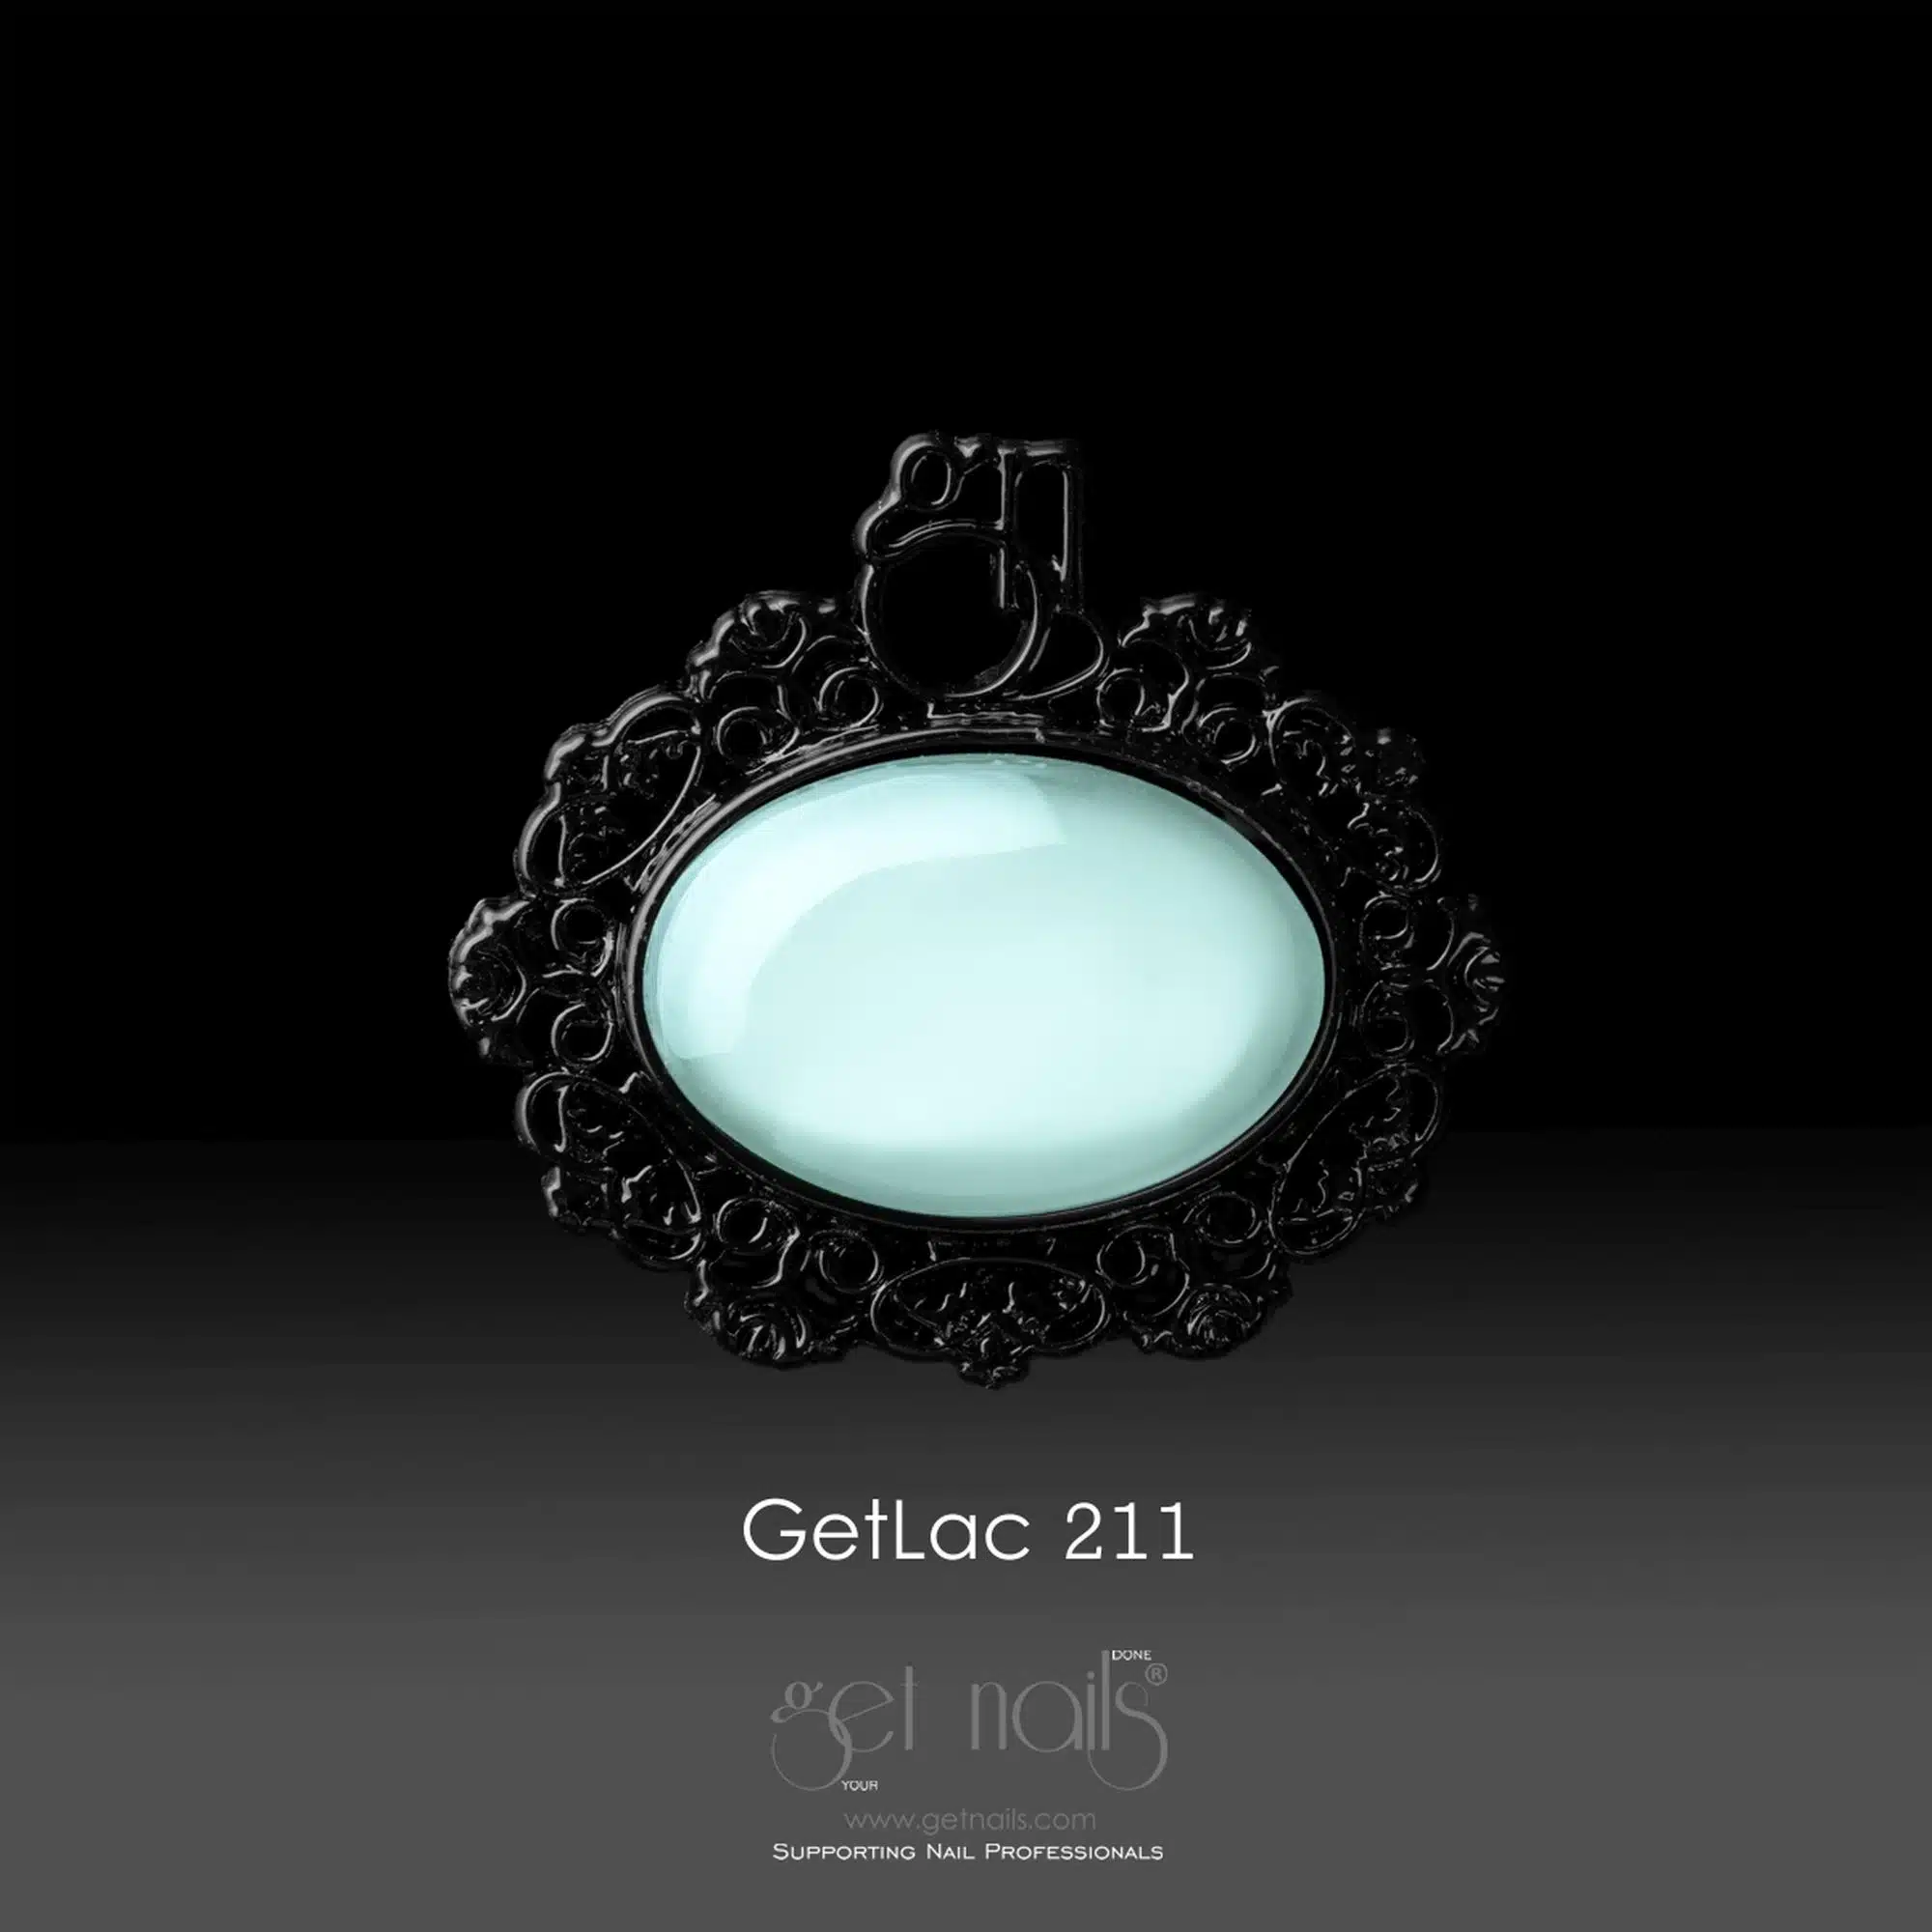 Get Nails Austria - GetLac 211 Mint Macaroon 15 g